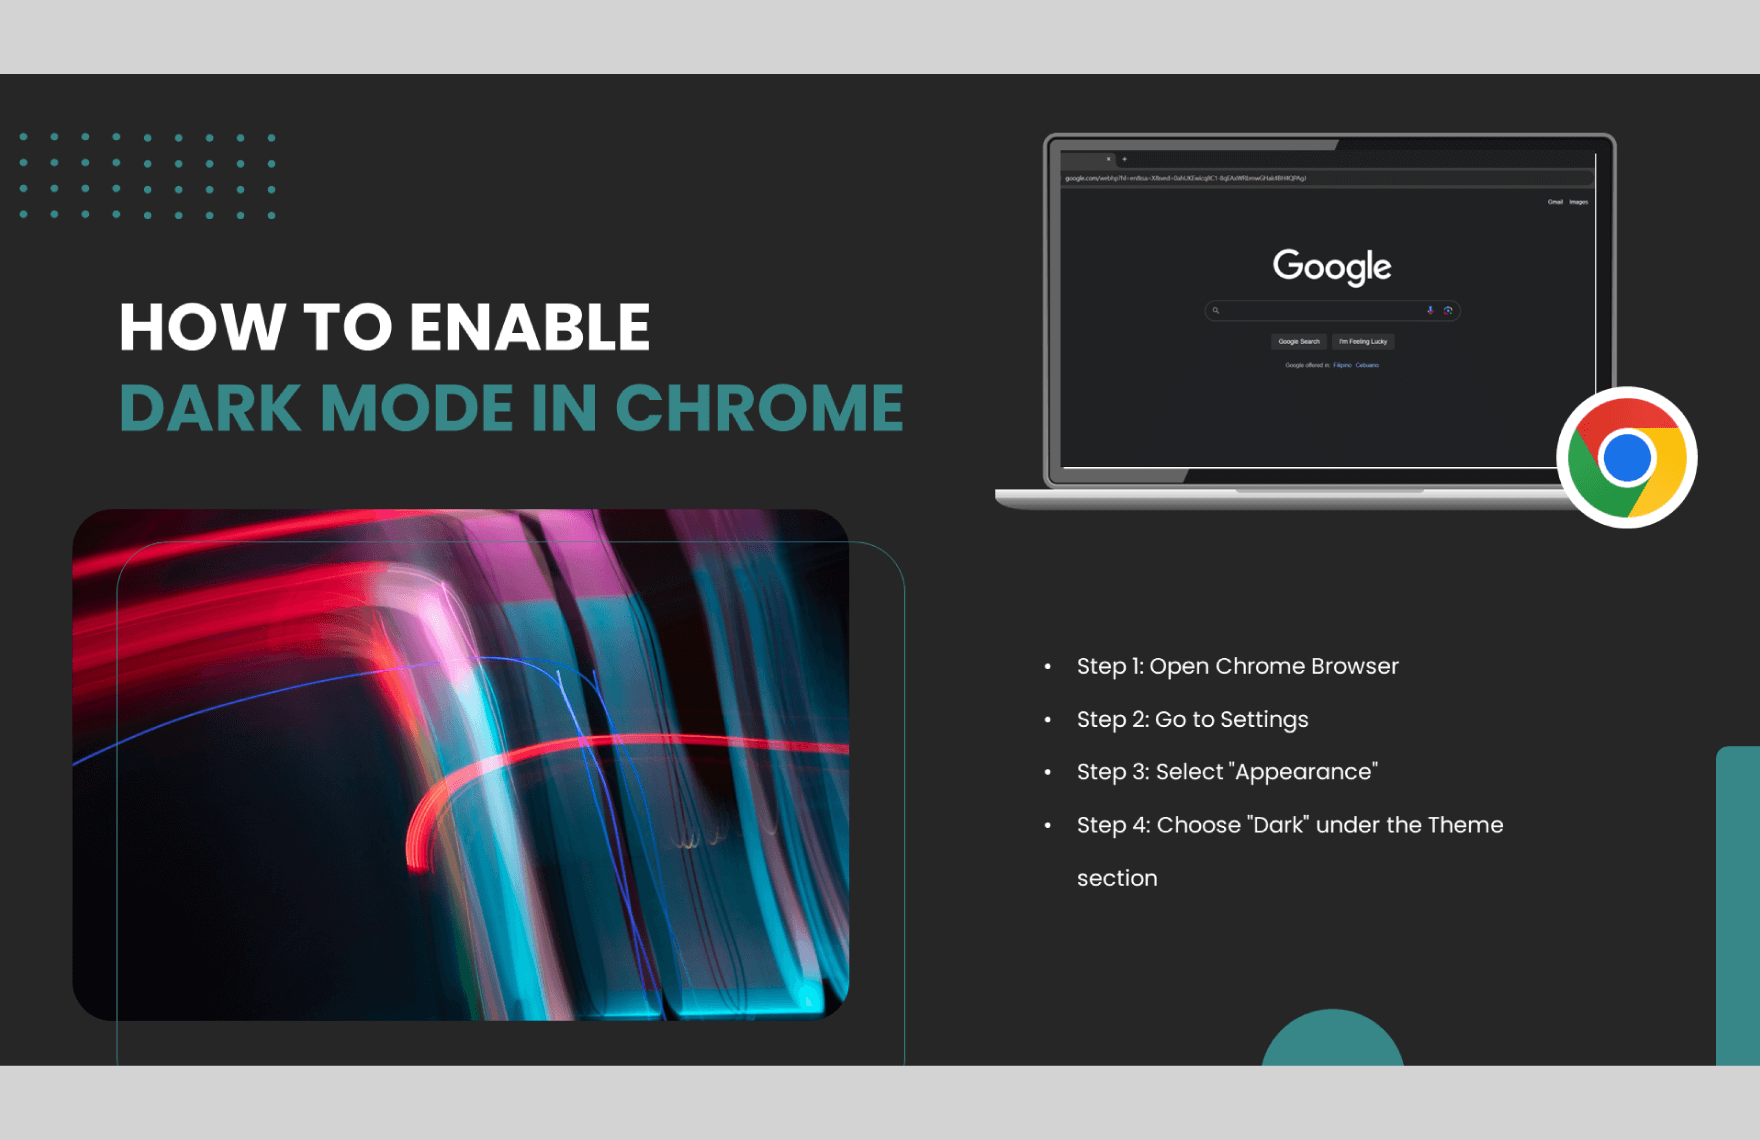 Chrome Dark Mode Themes Template